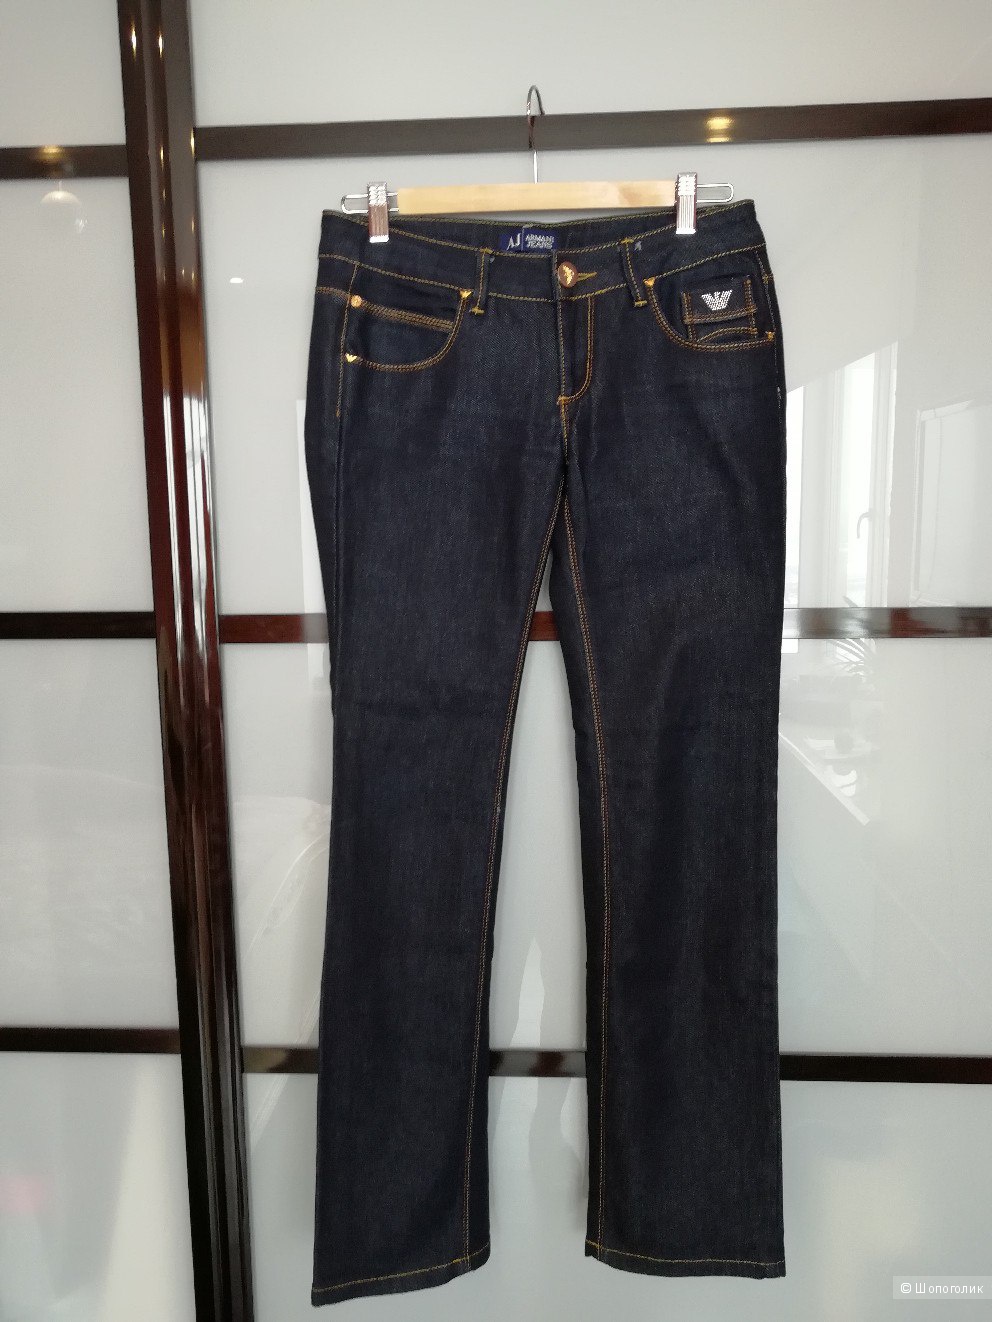 Armani jeans джинсы 42-44